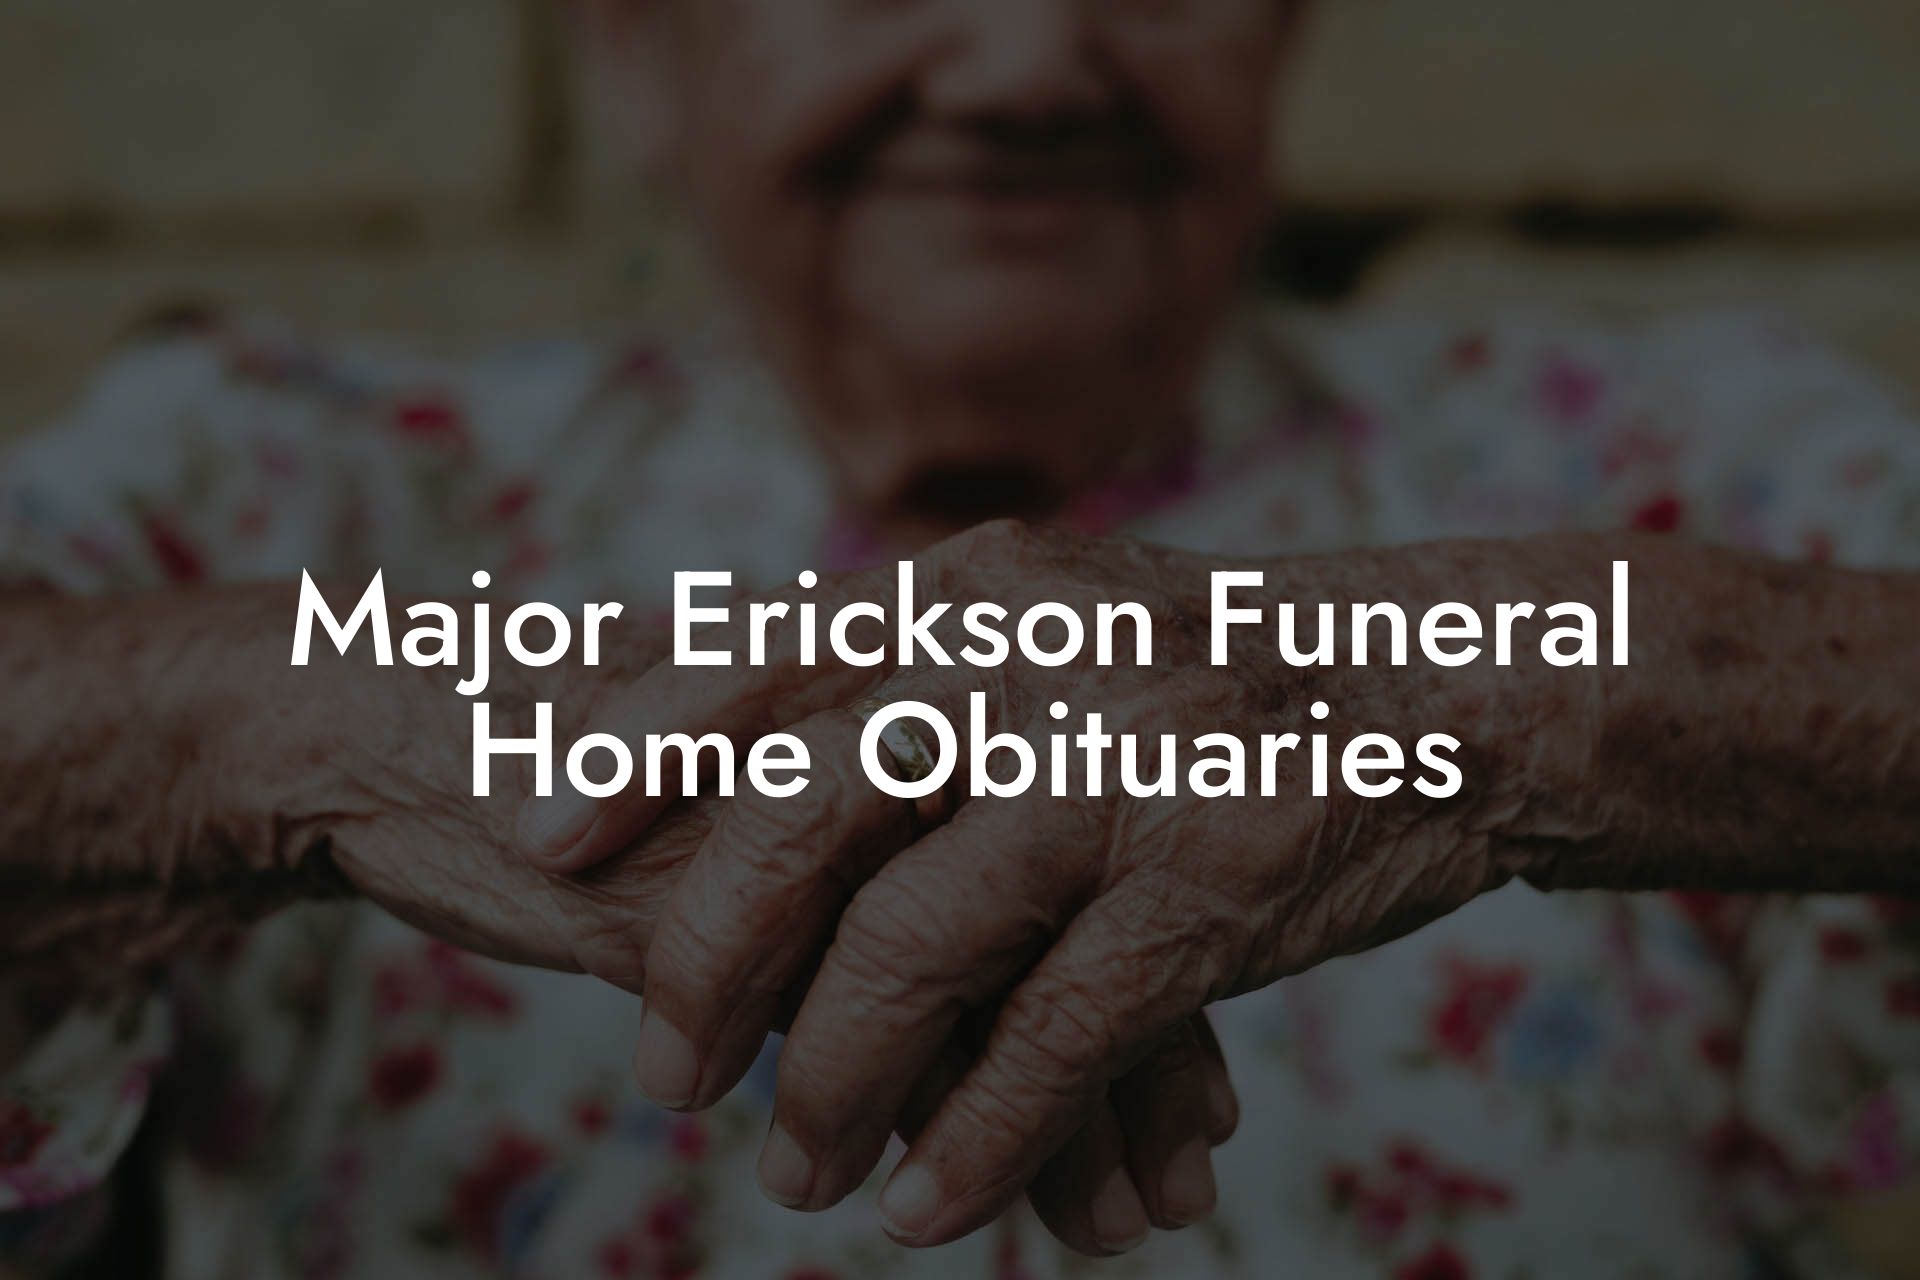 Major Erickson Funeral Home Obituaries